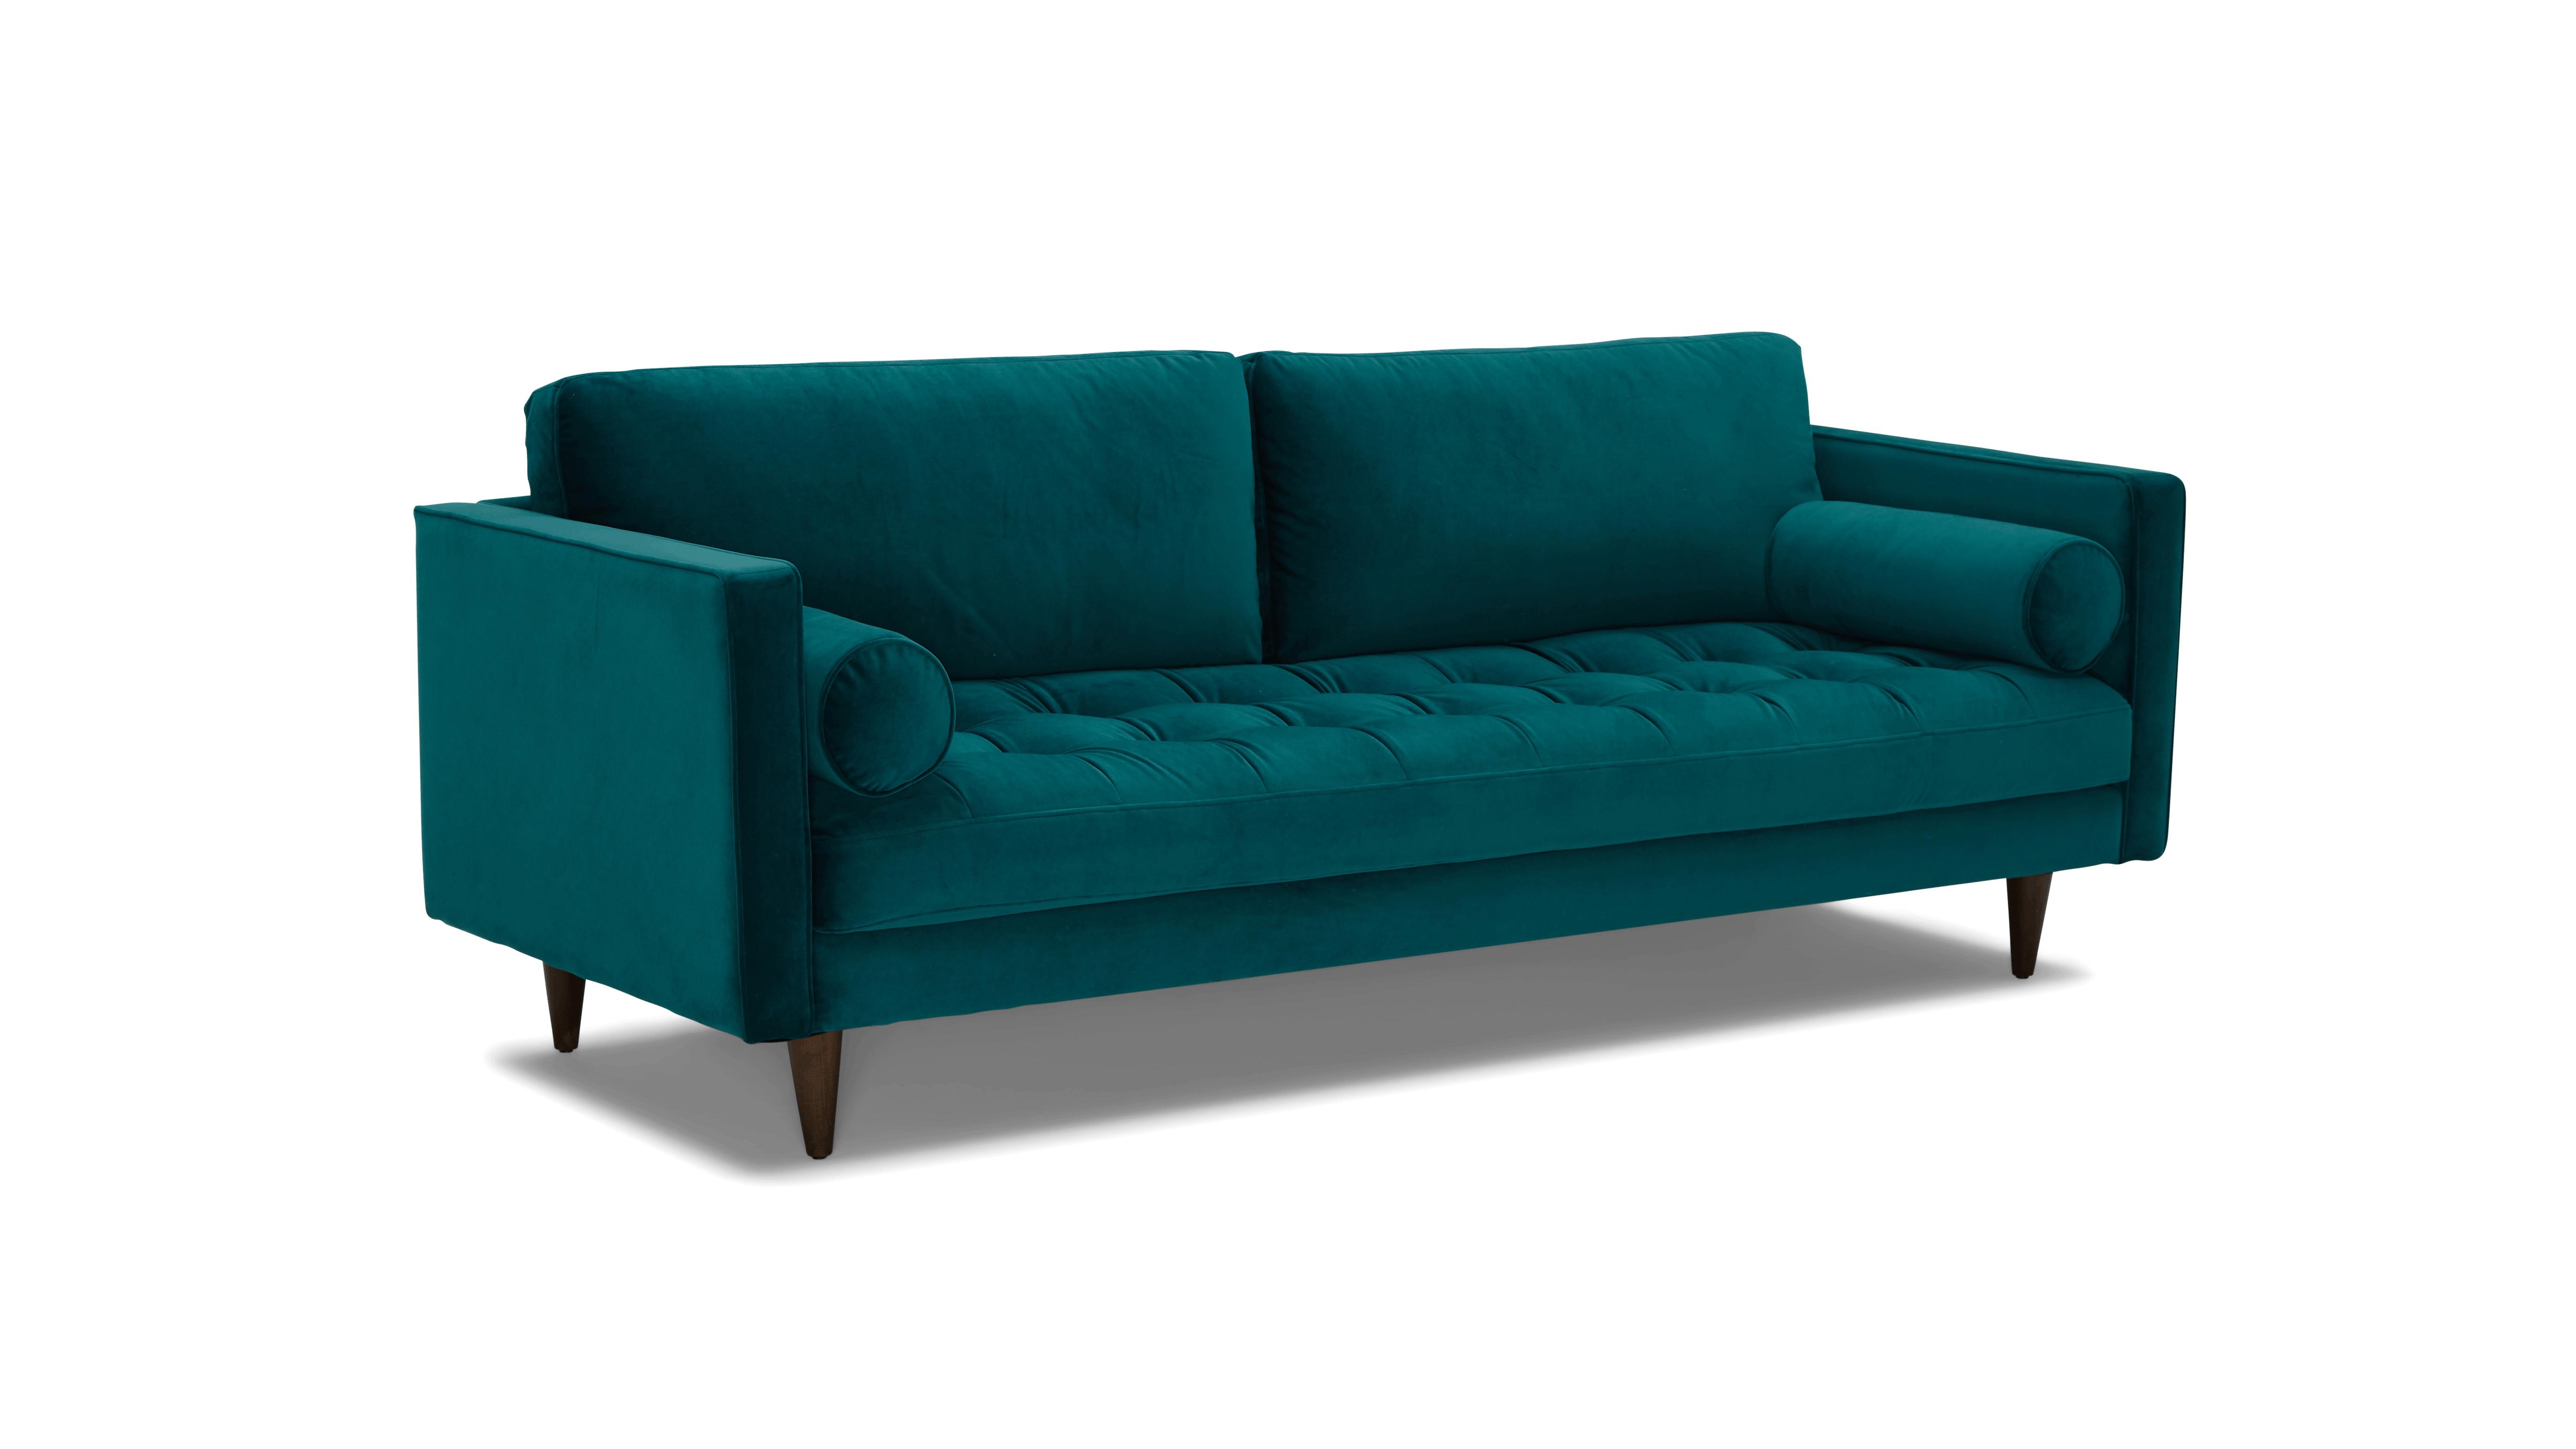 Blue Briar Mid Century Modern Sofa - Royale Peacock - Mocha - Image 1